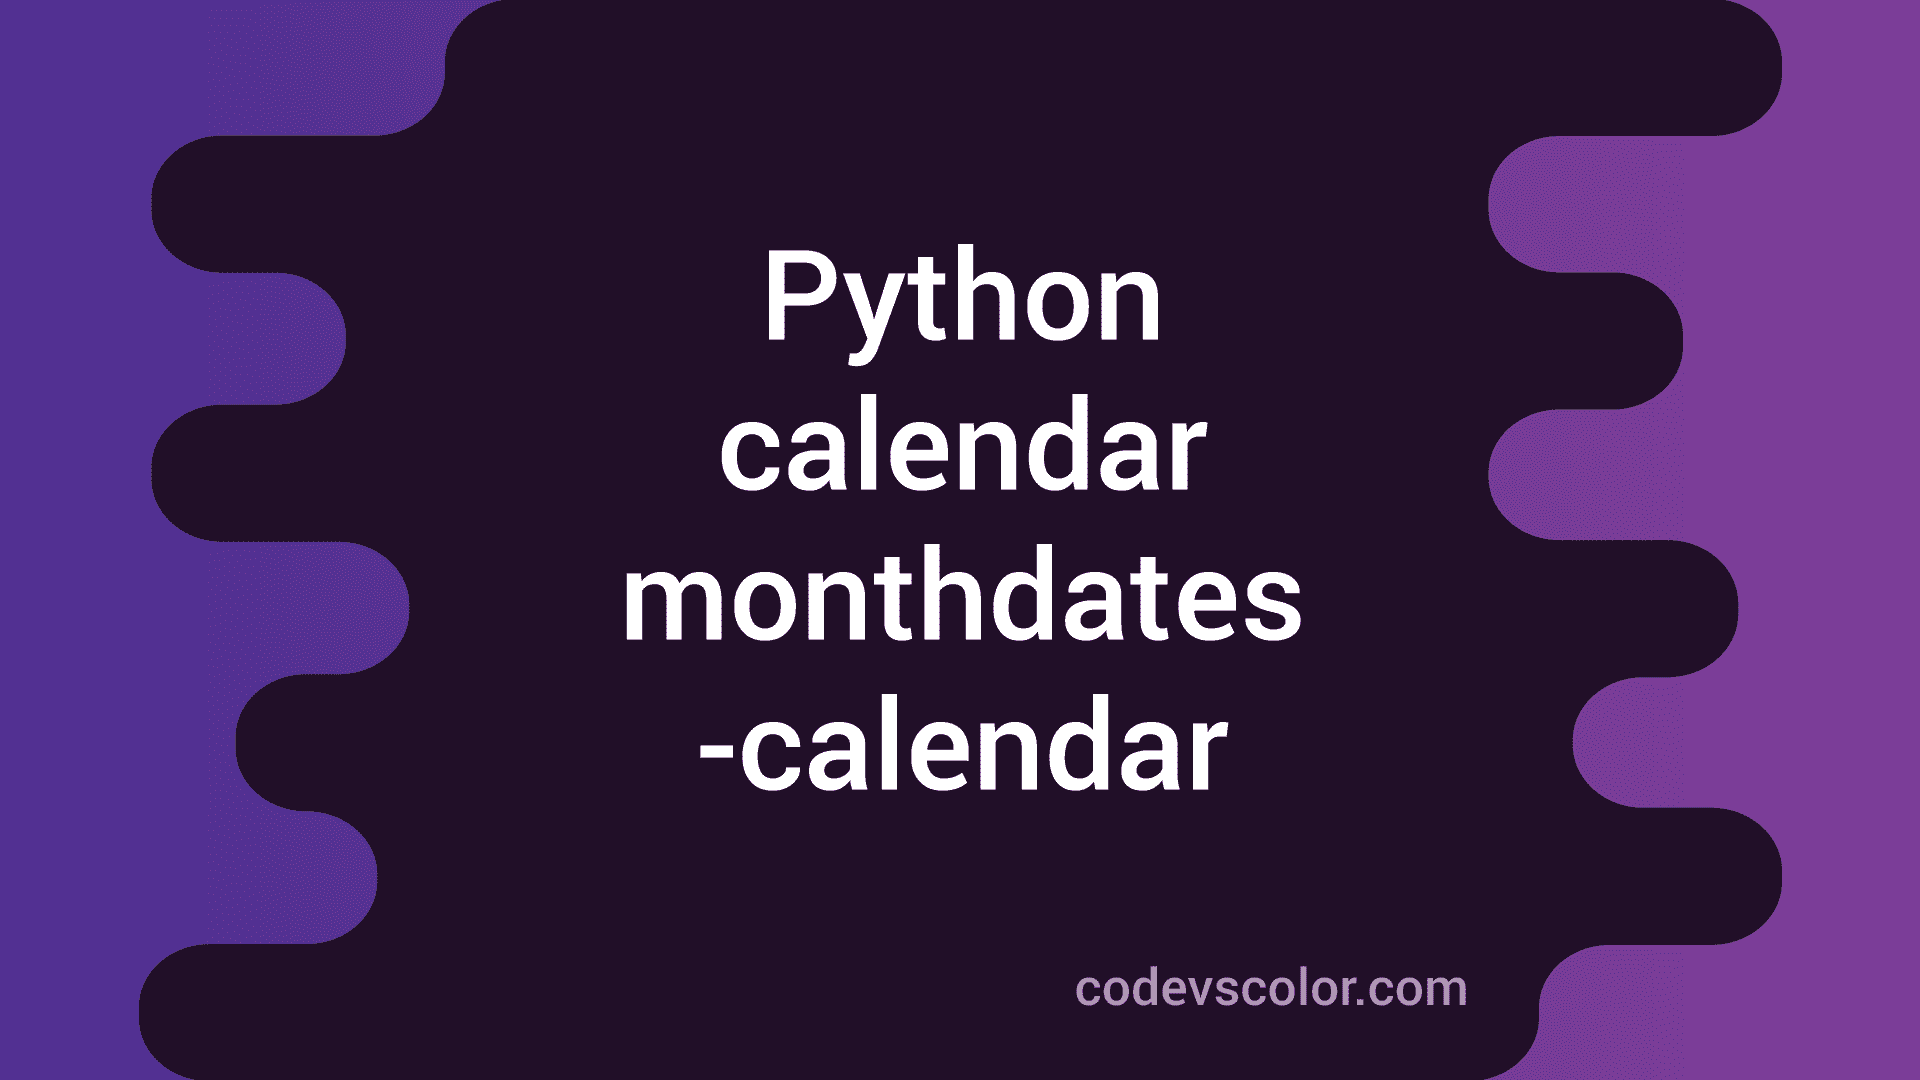 Python calendar monthdatescalendar tutorial CodeVsColor